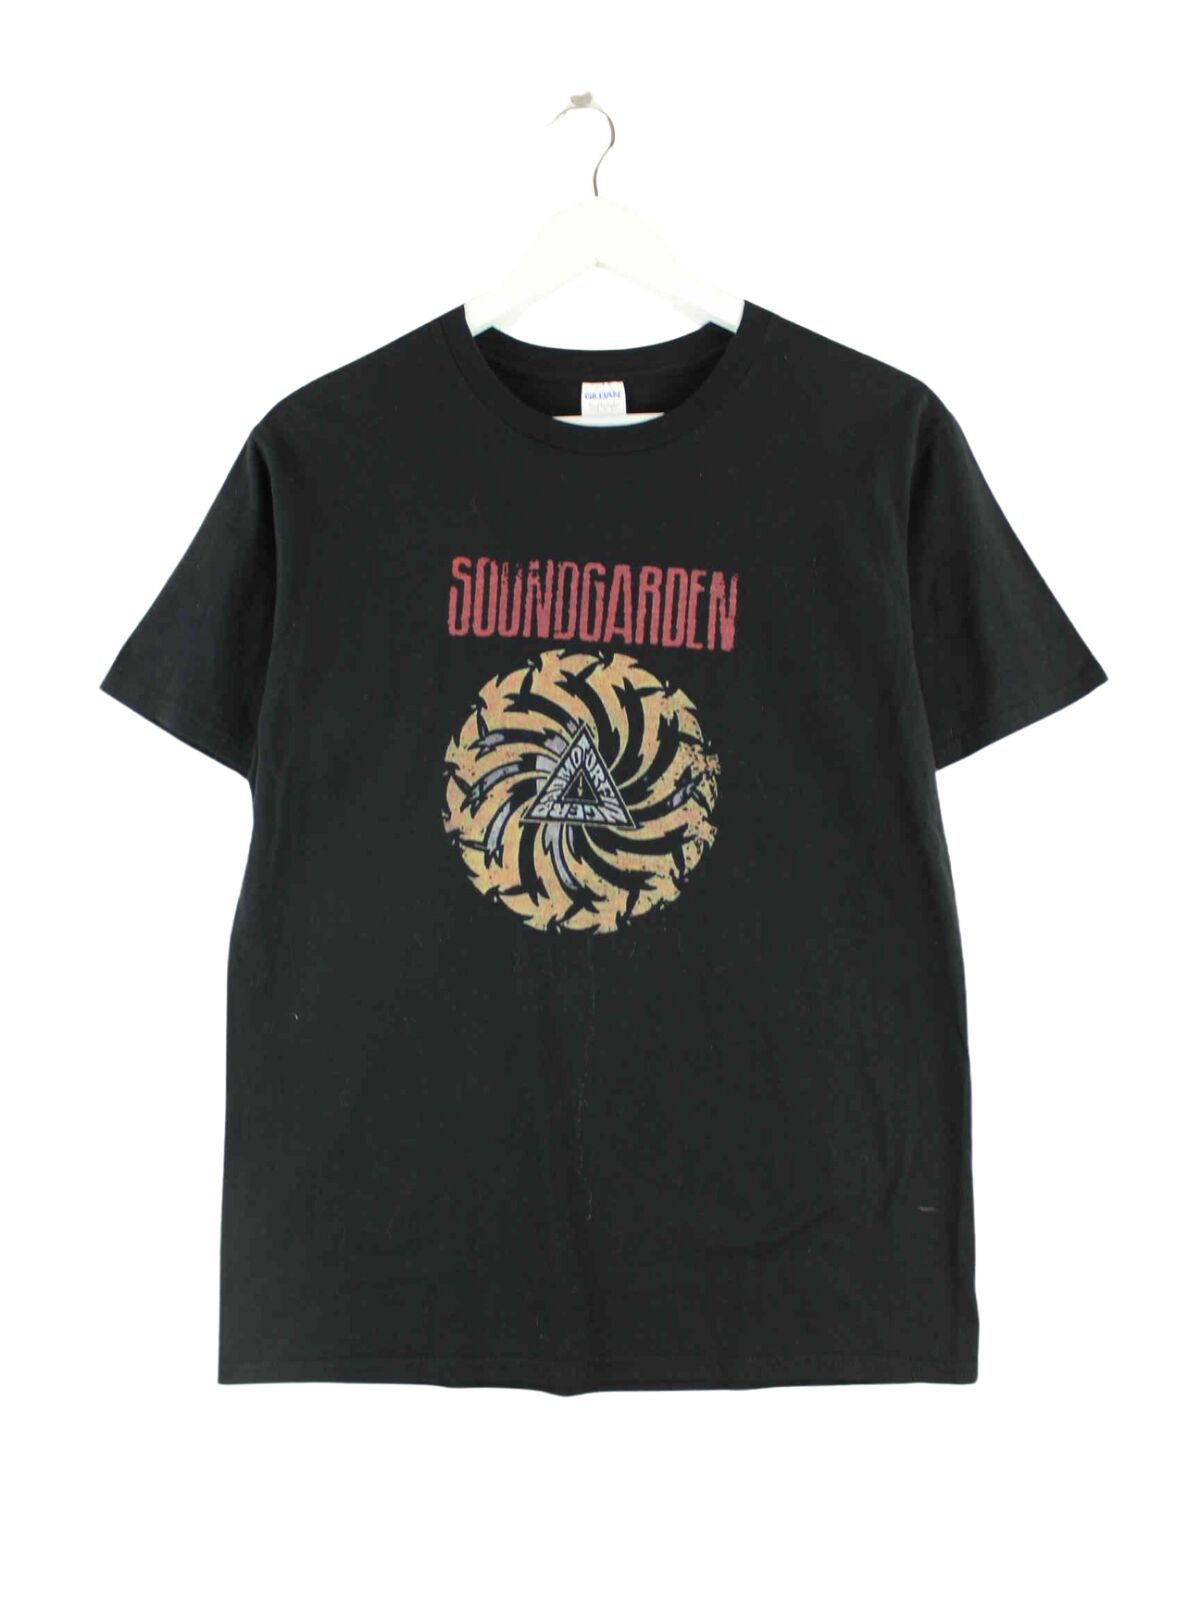 Gildan Soundgarden Print T-Shirt Schwarz S (front image)